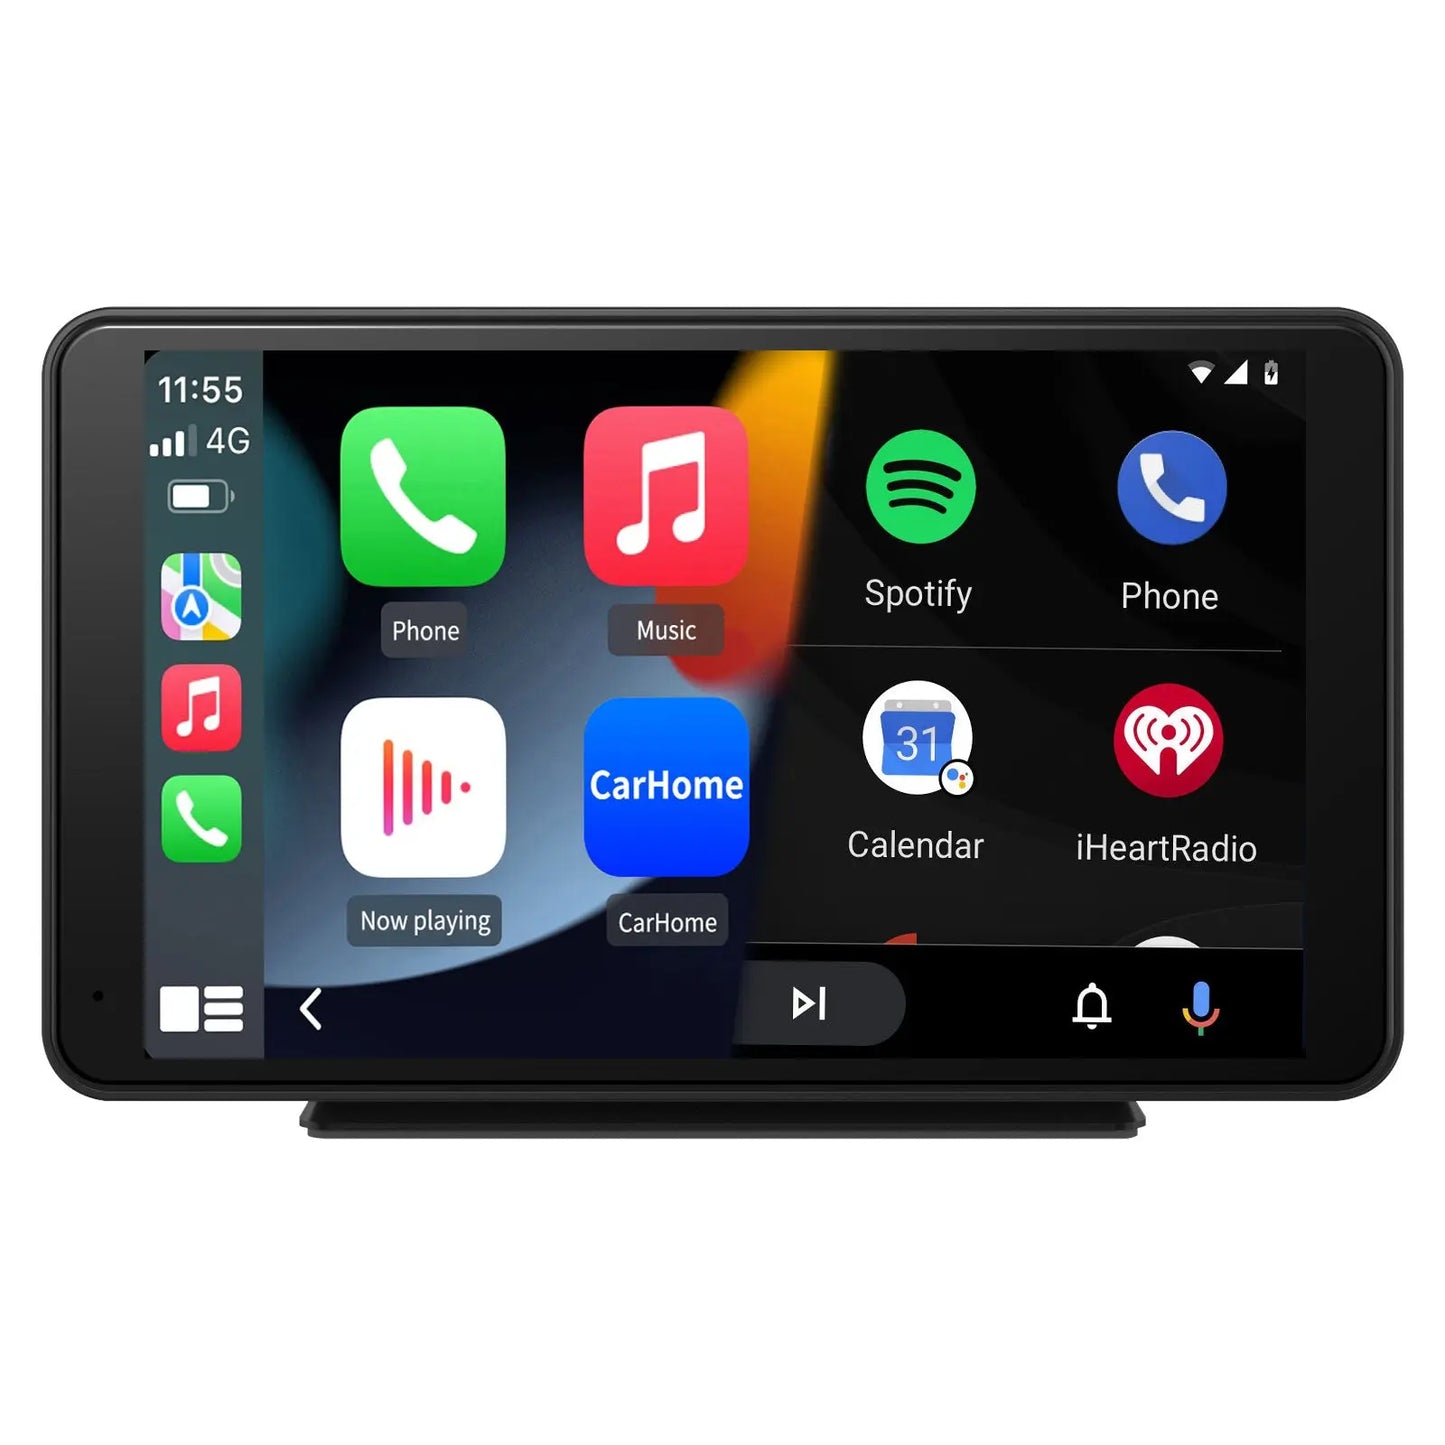 Wireless Android Auto & CarPlay Display For Any Car! 